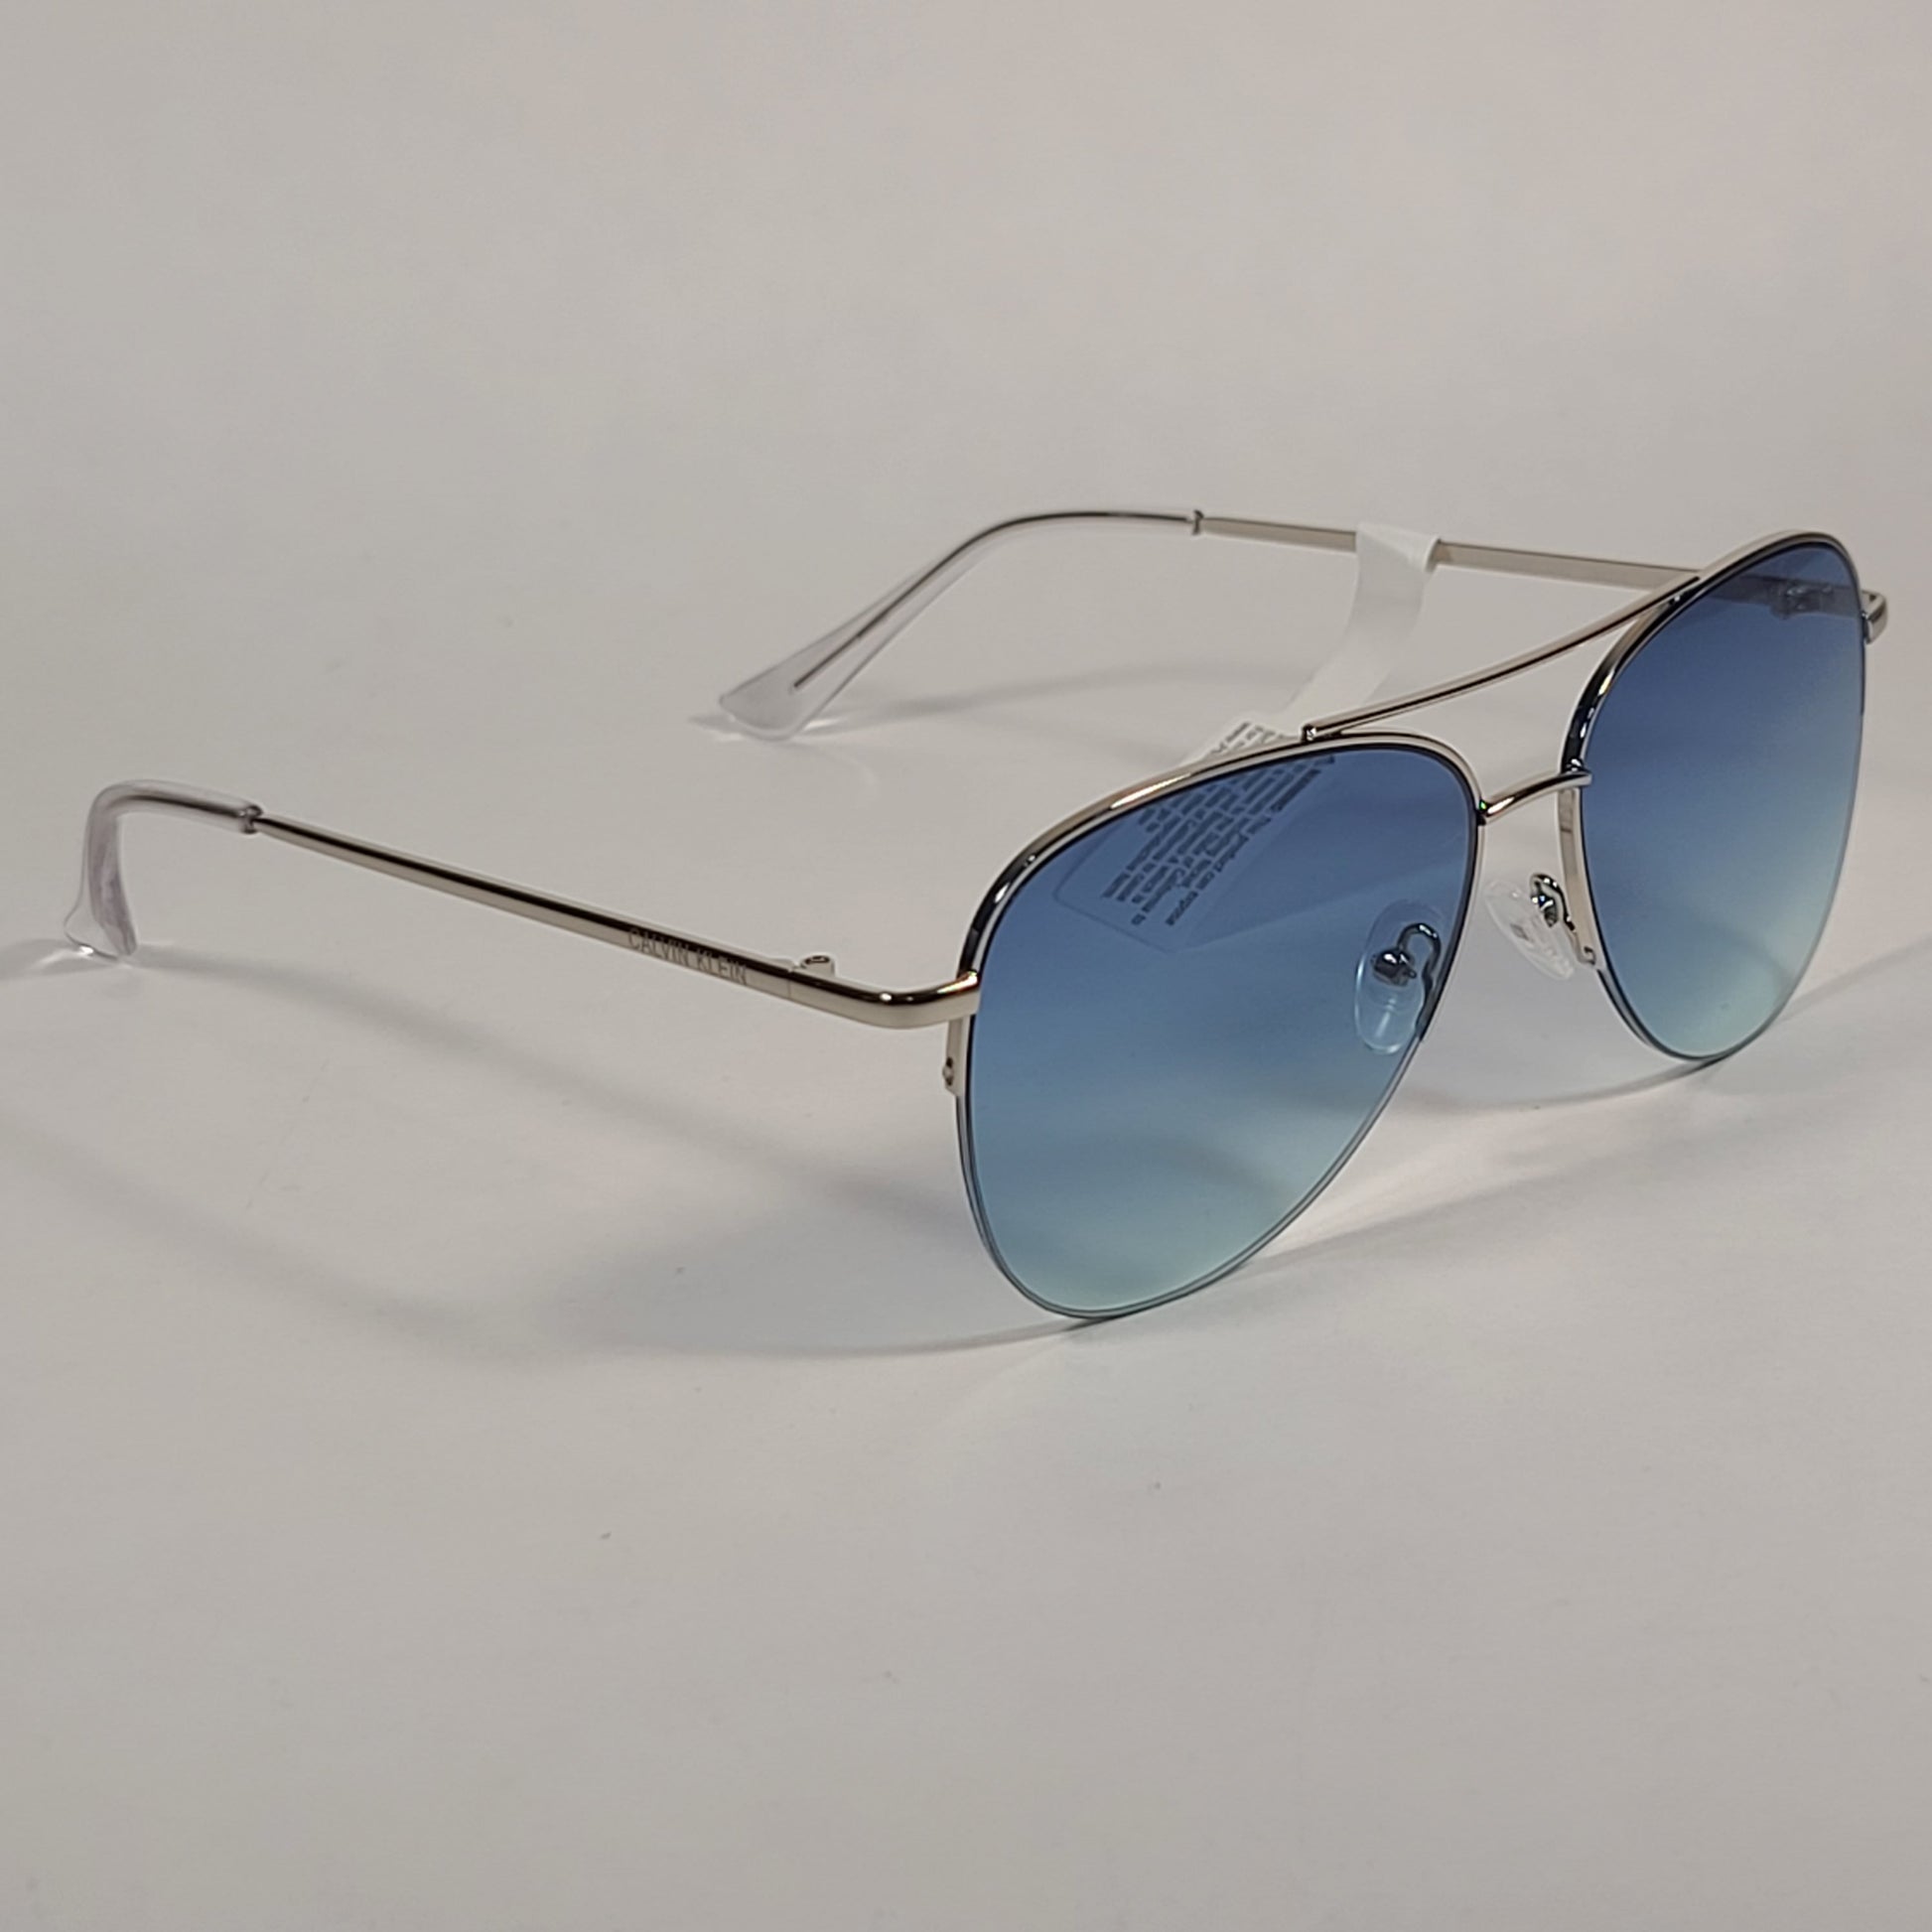 Calvin Klein Aviator Half Rim Sunglasses CK20119S 045 Silver Frame Blue Gradient Lens - Sunglasses